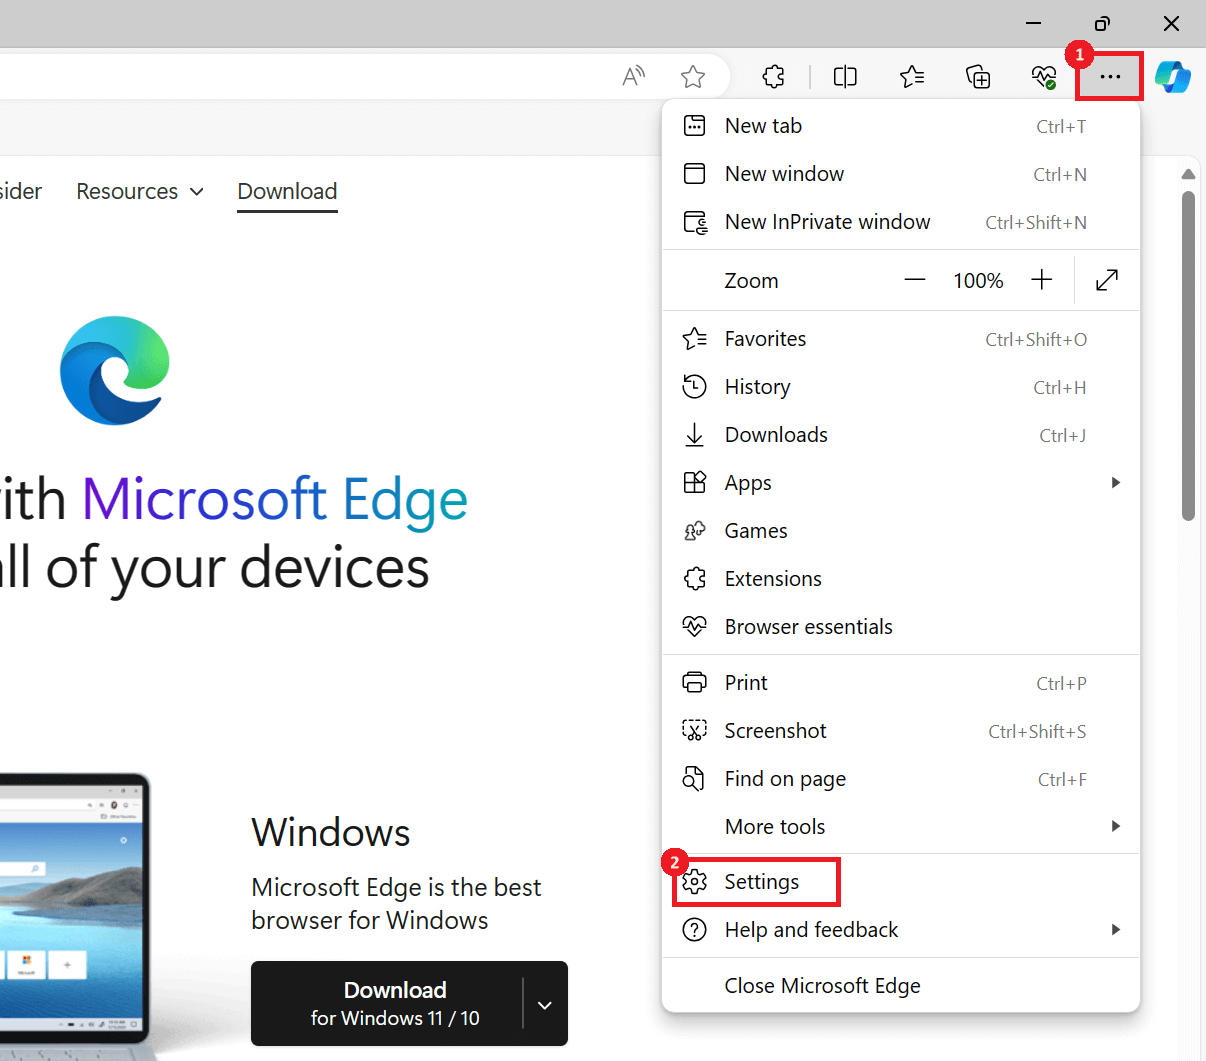 "Settings" option highlighted on Microsoft Edge.